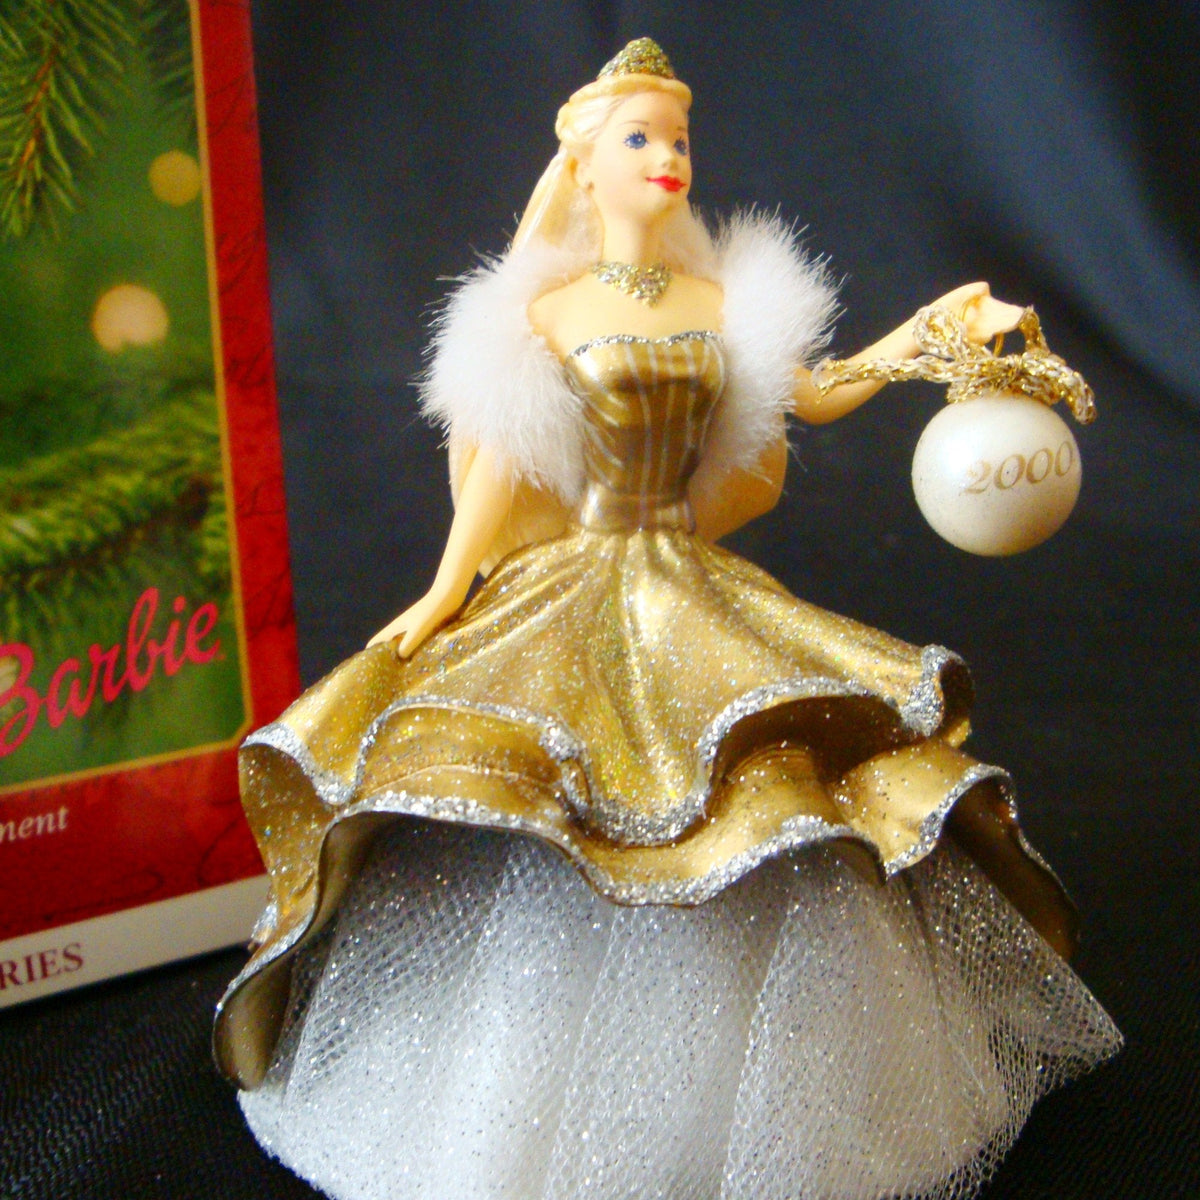 2000 Hallmark Keepsake Ornament Barbie Birthday Wishes Collectors Series